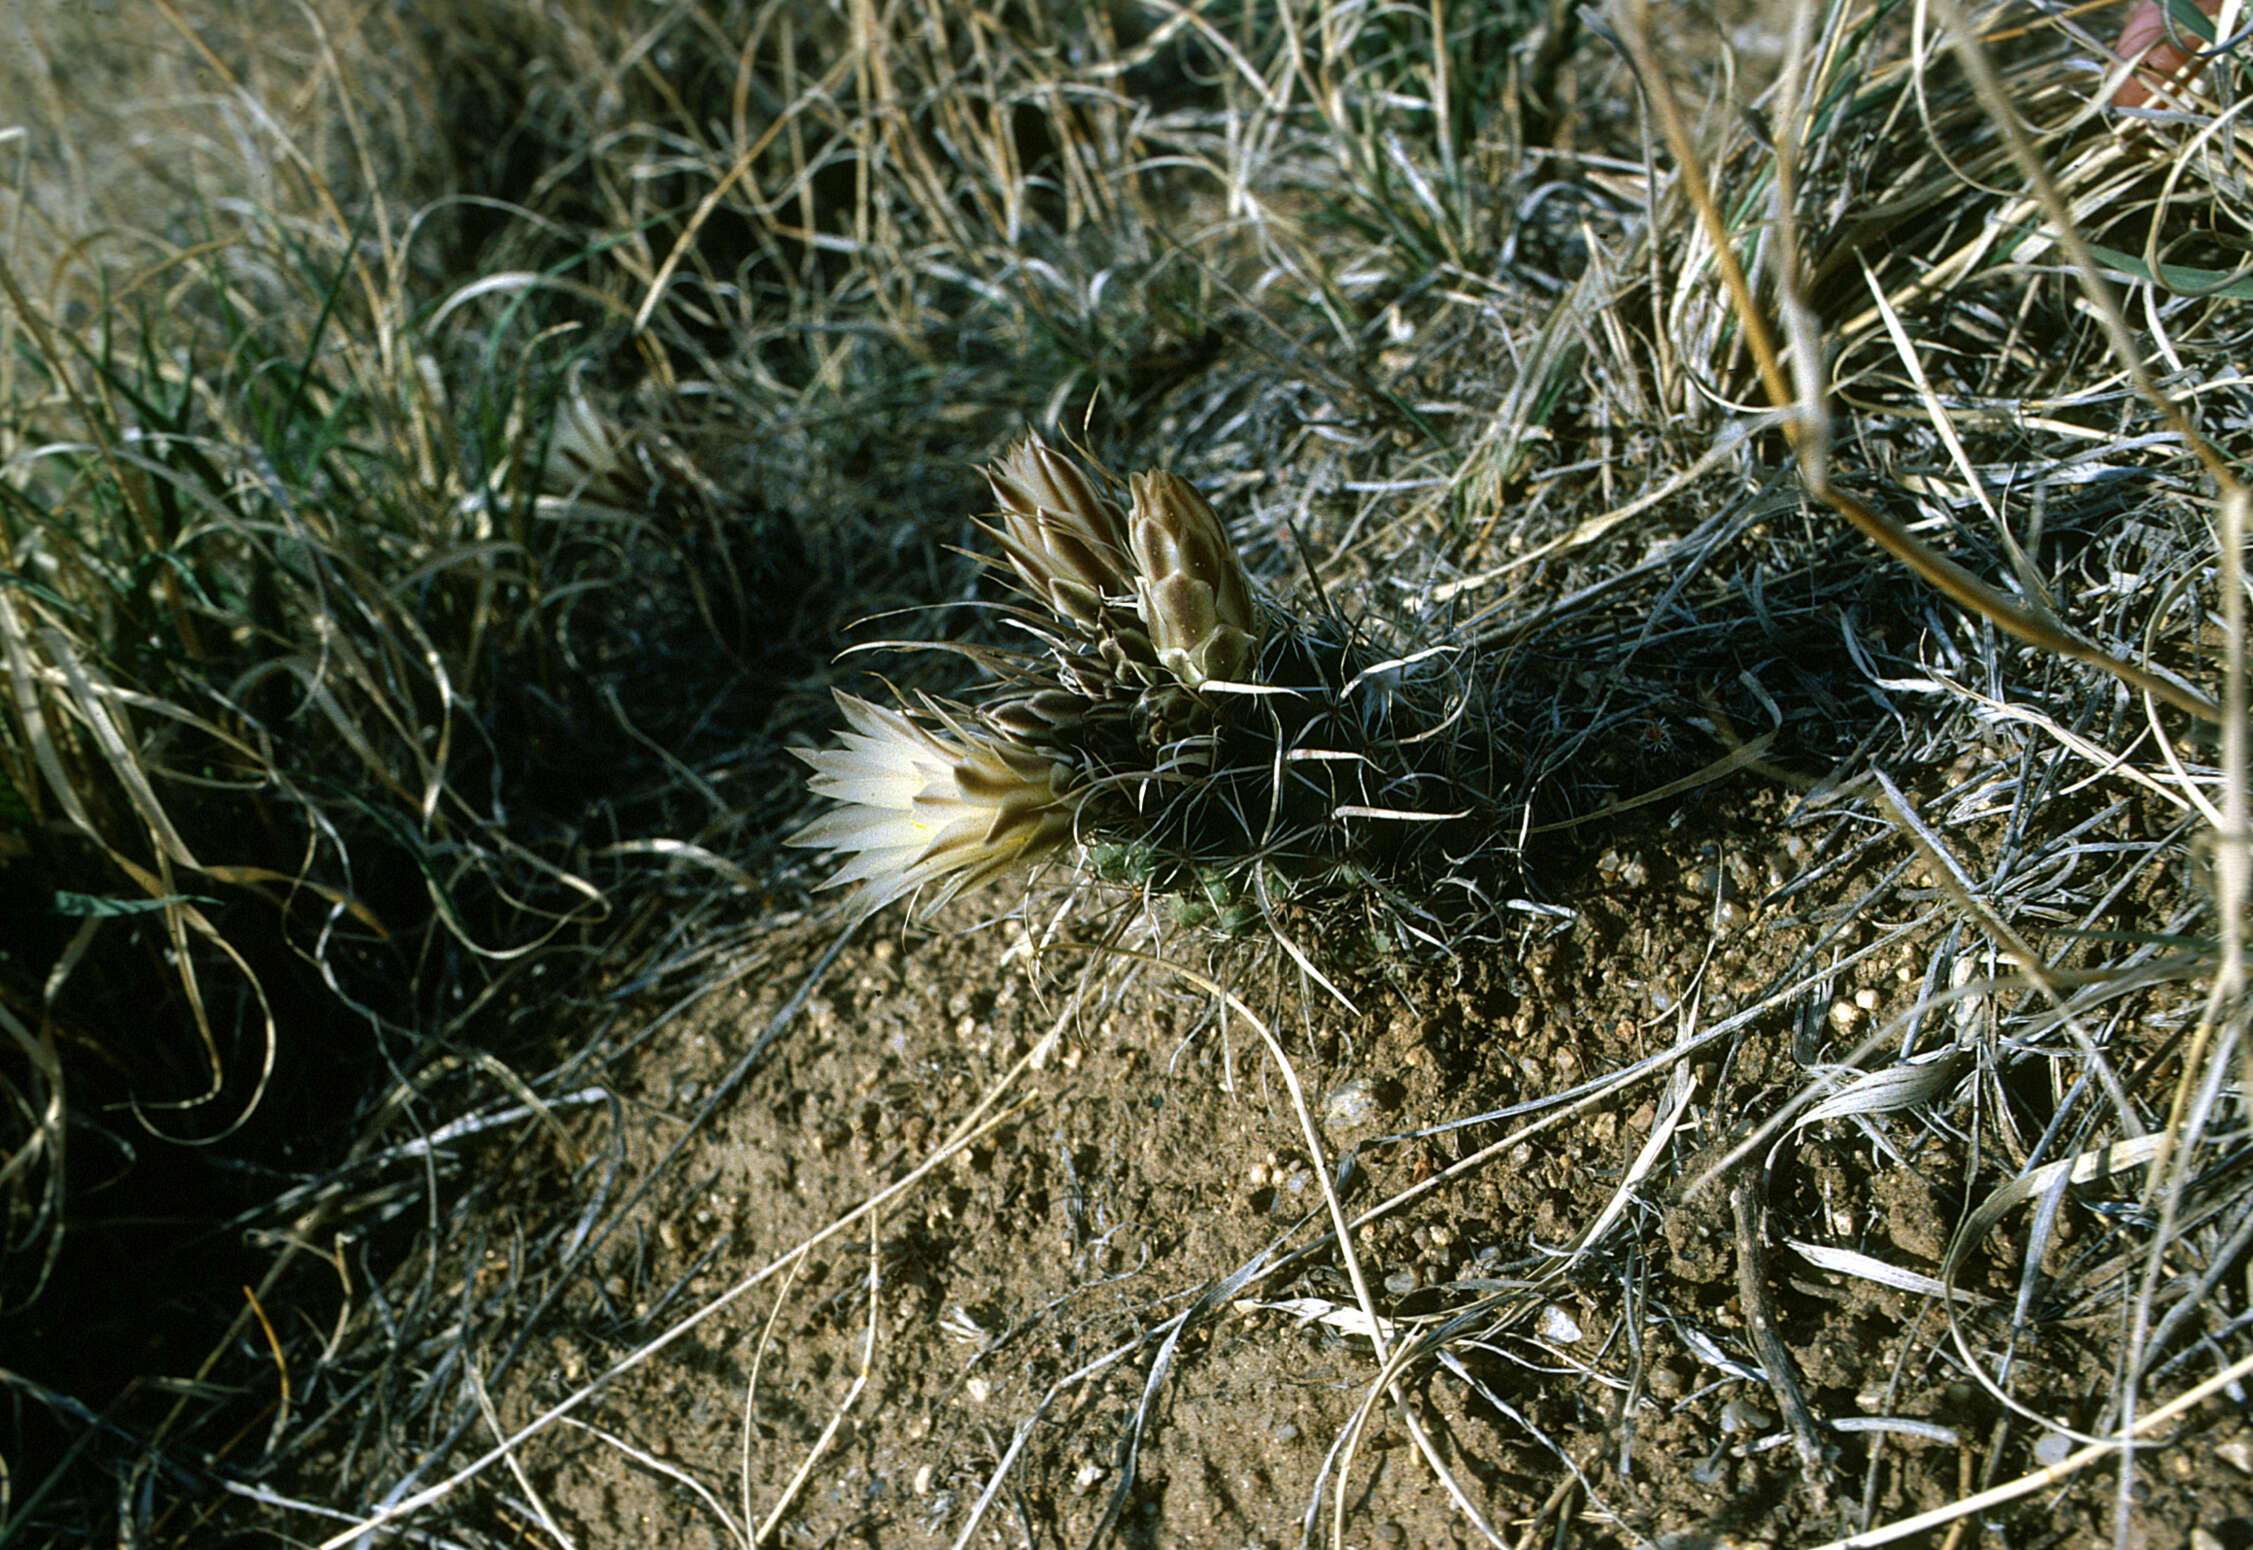 Image of Grama Grass Cactus